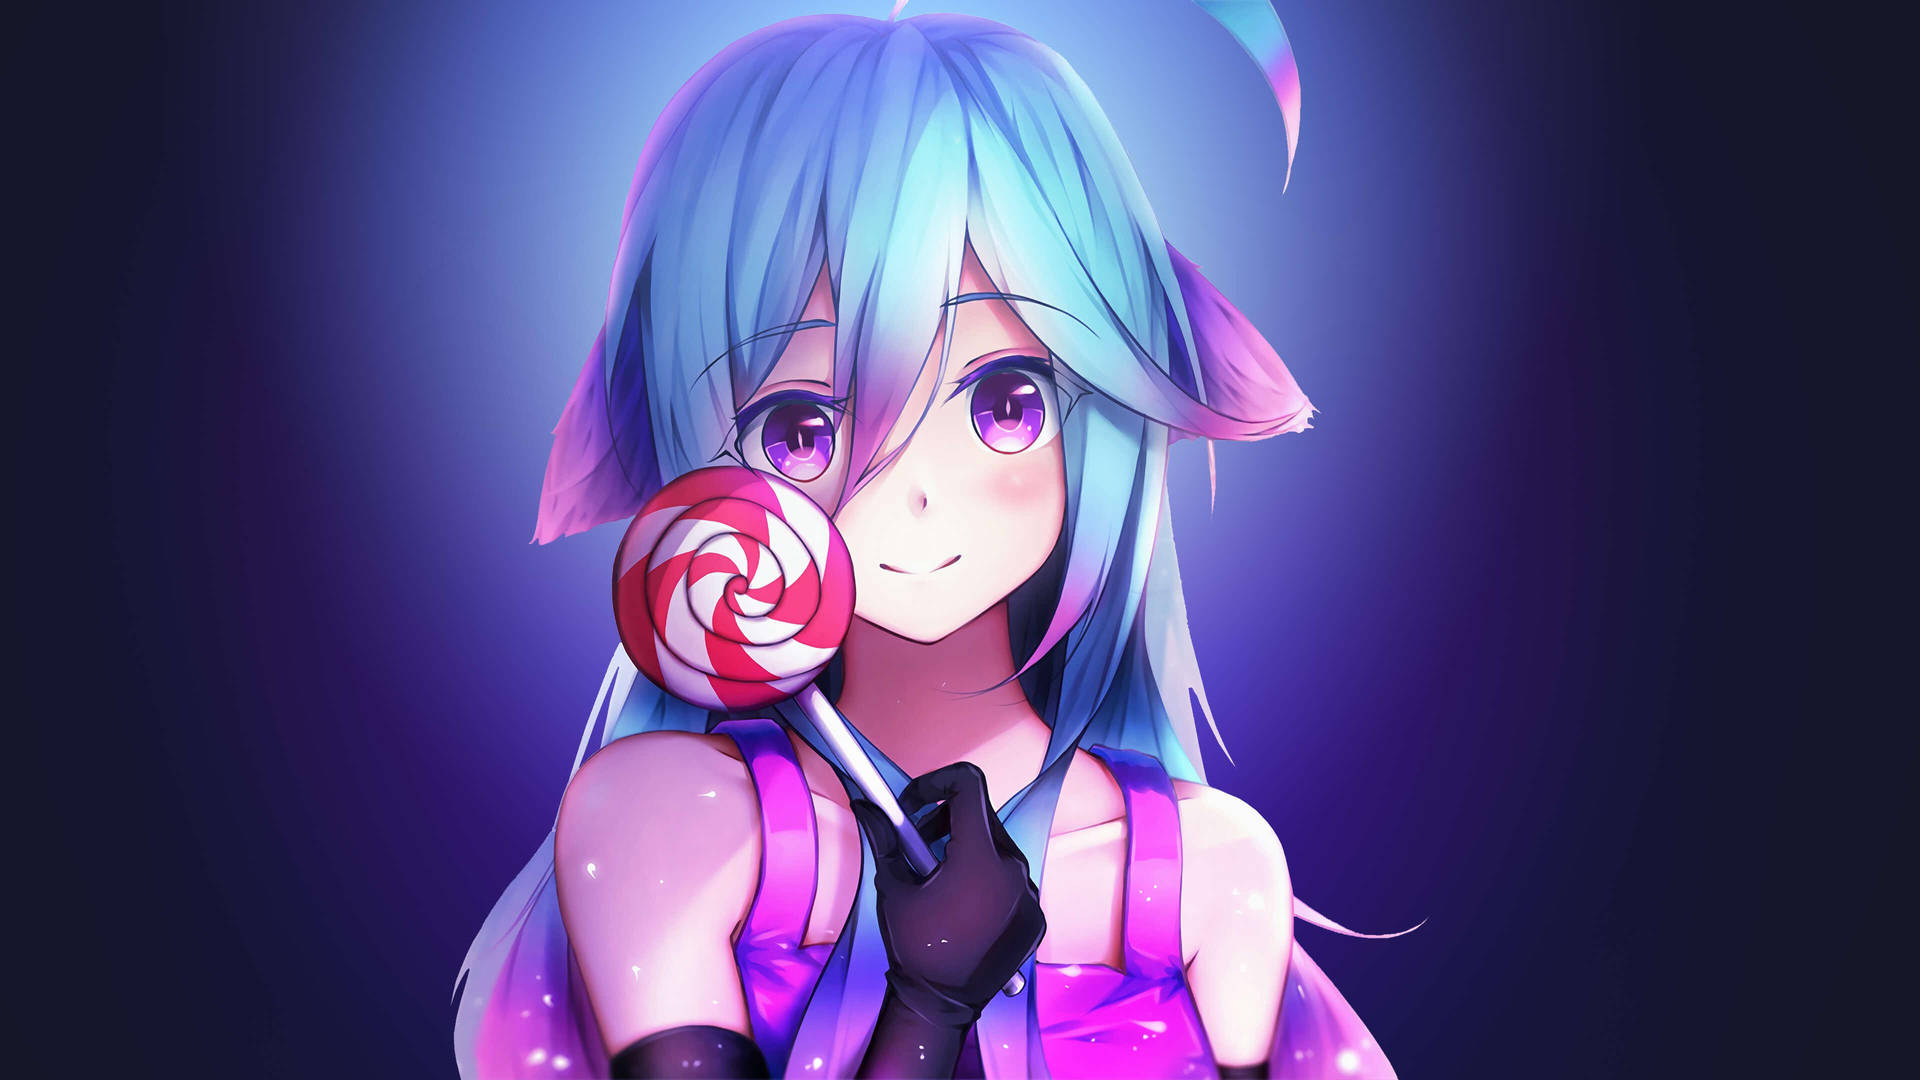 Lollipop anime girl avatar illustration image_picture free download  402166564_lovepik.com